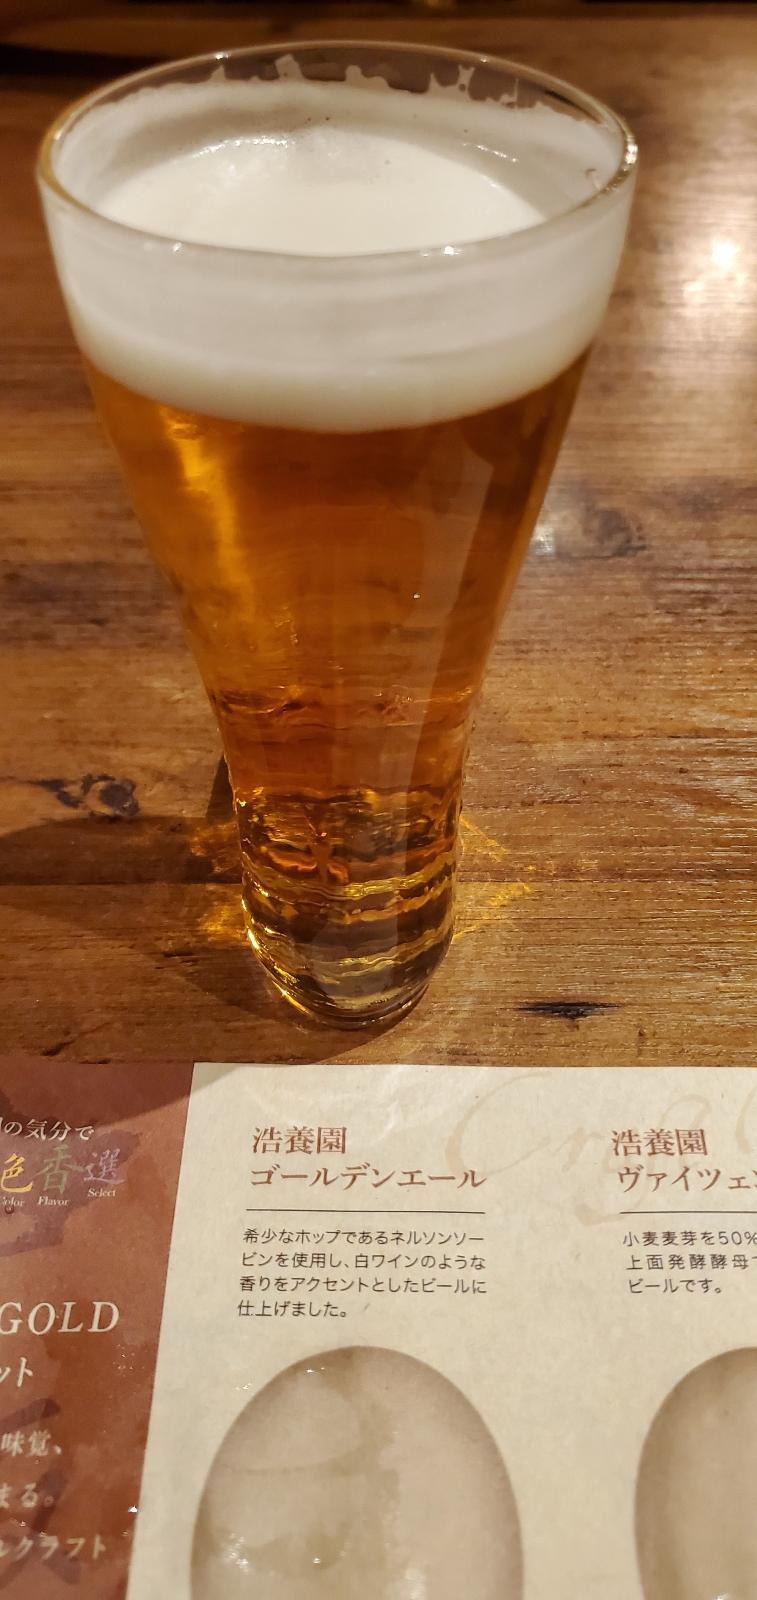 Koyoen Golden Ale